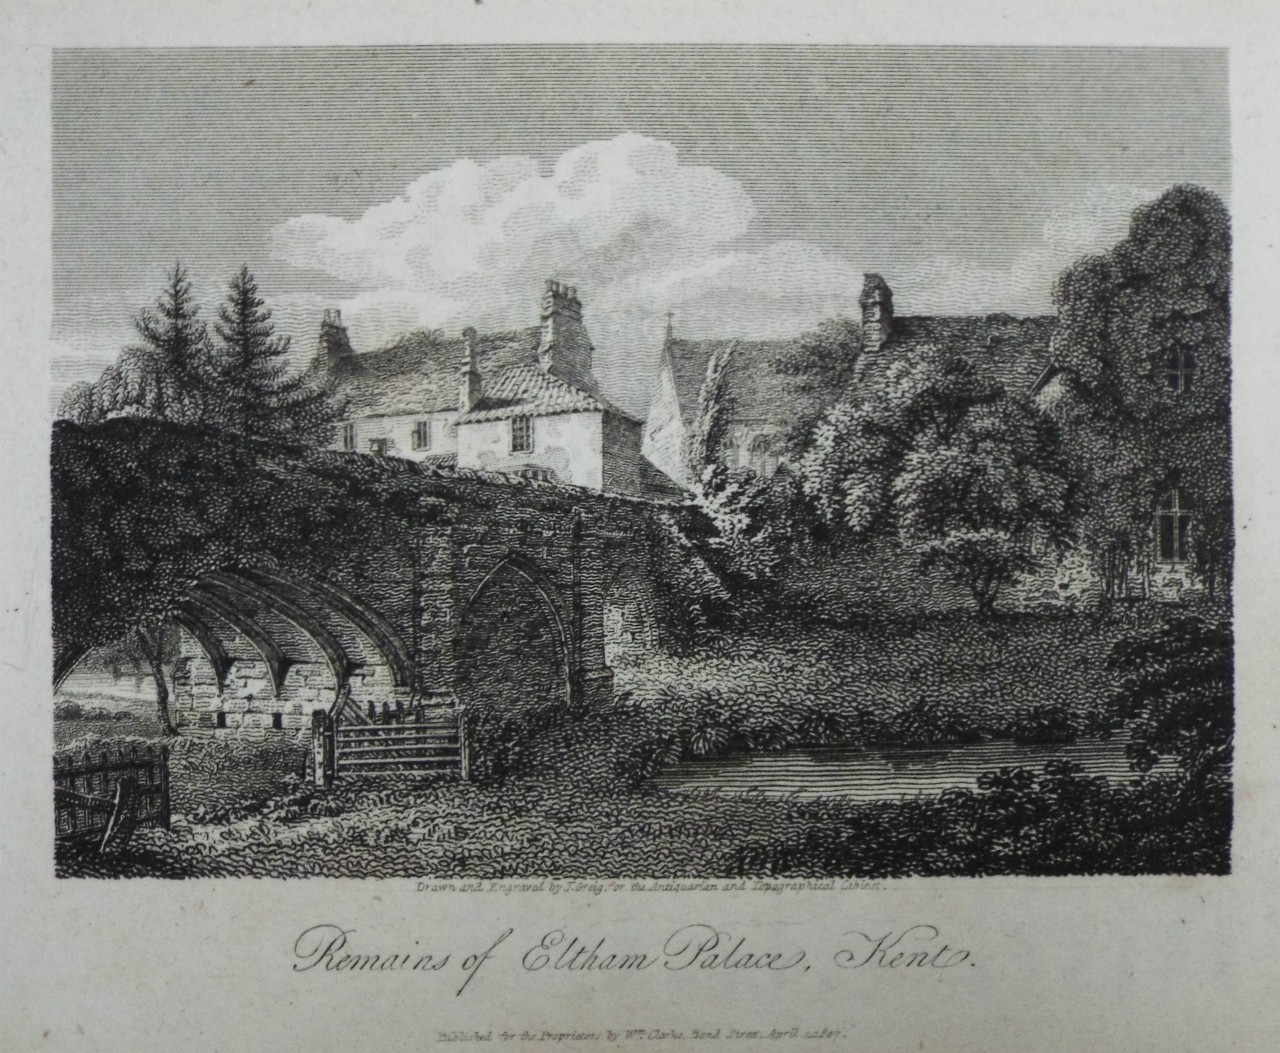 Print - Remains of Eltham Palace, Kent. - Greig